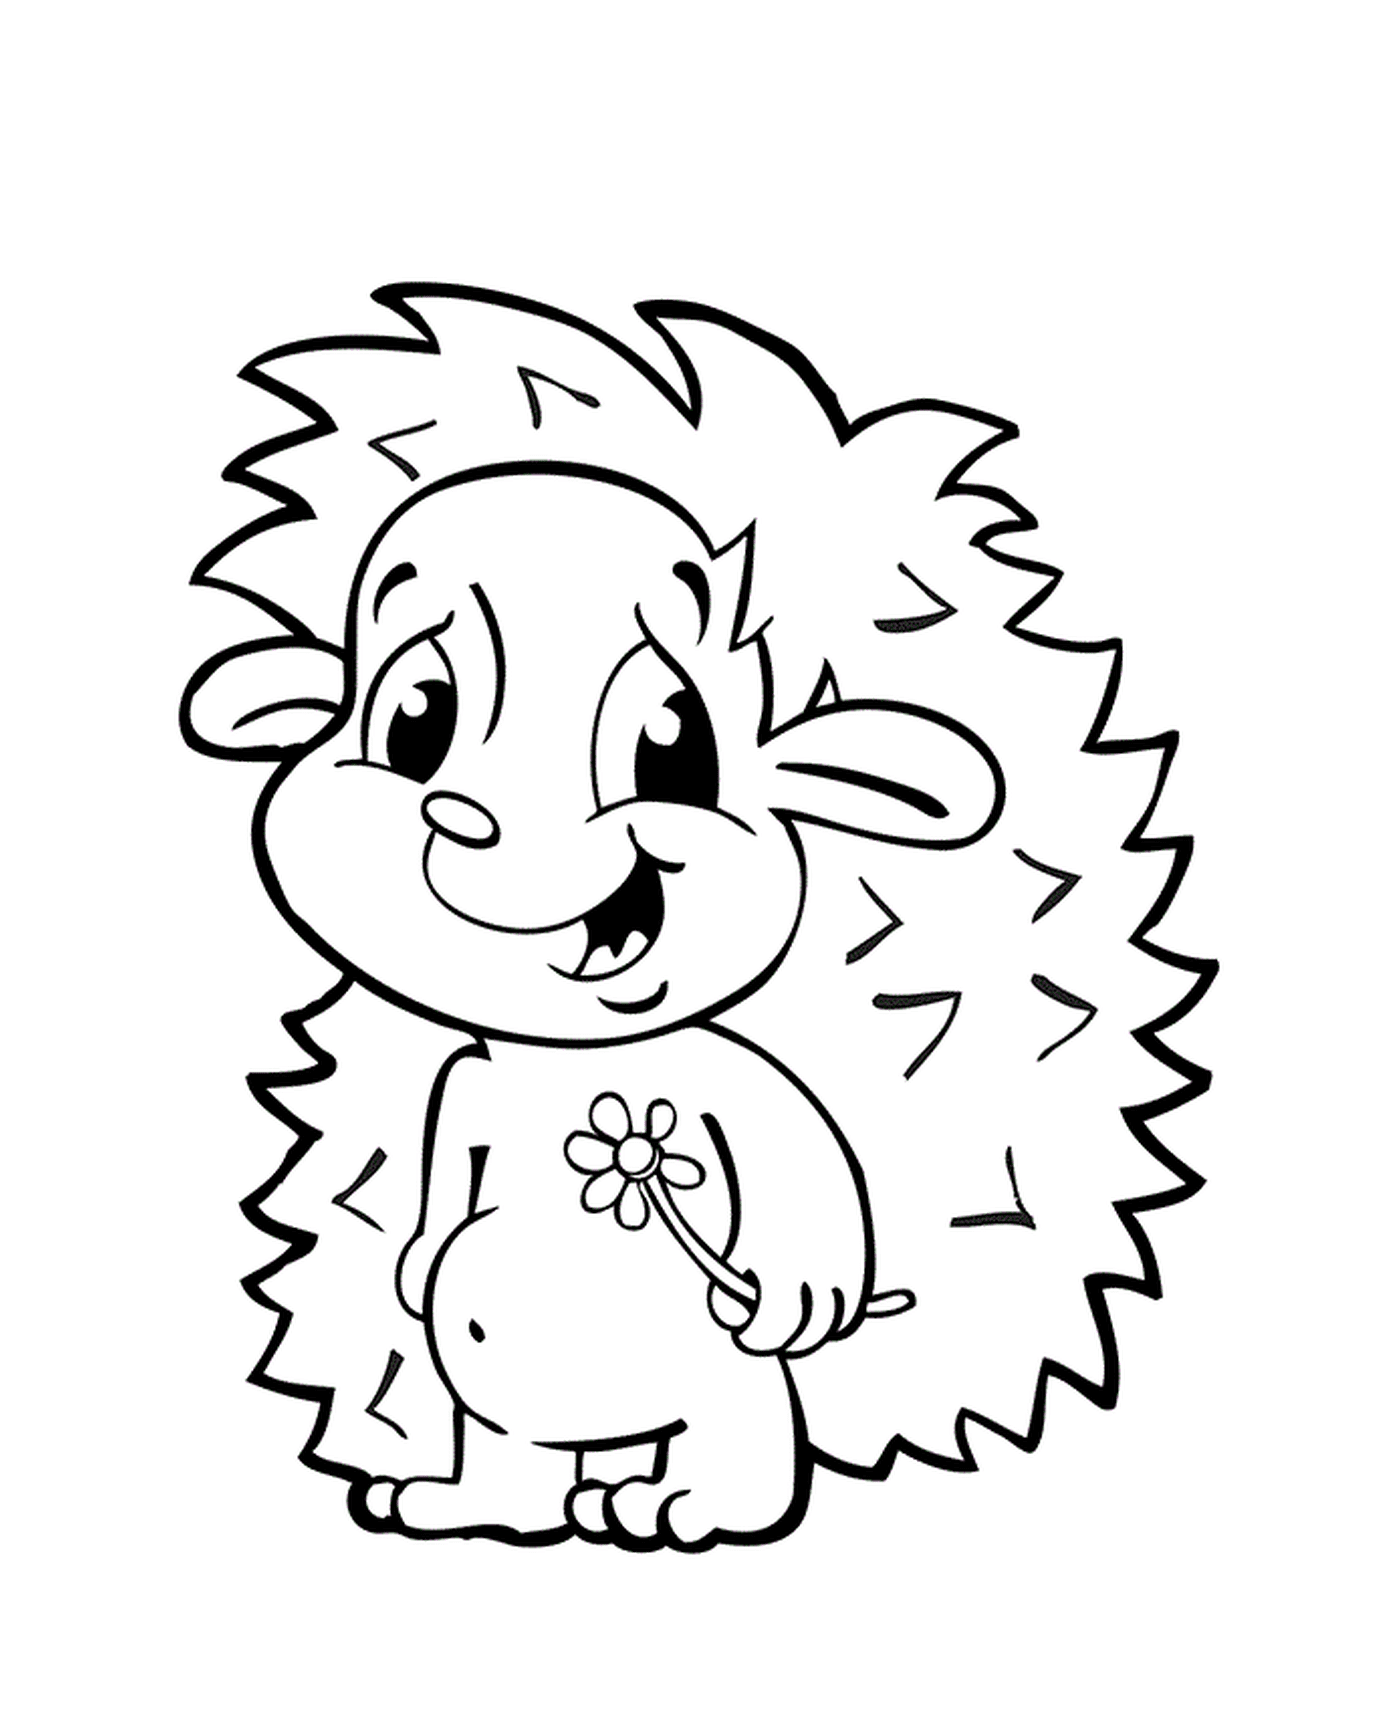  Hedgehog holding a flower 